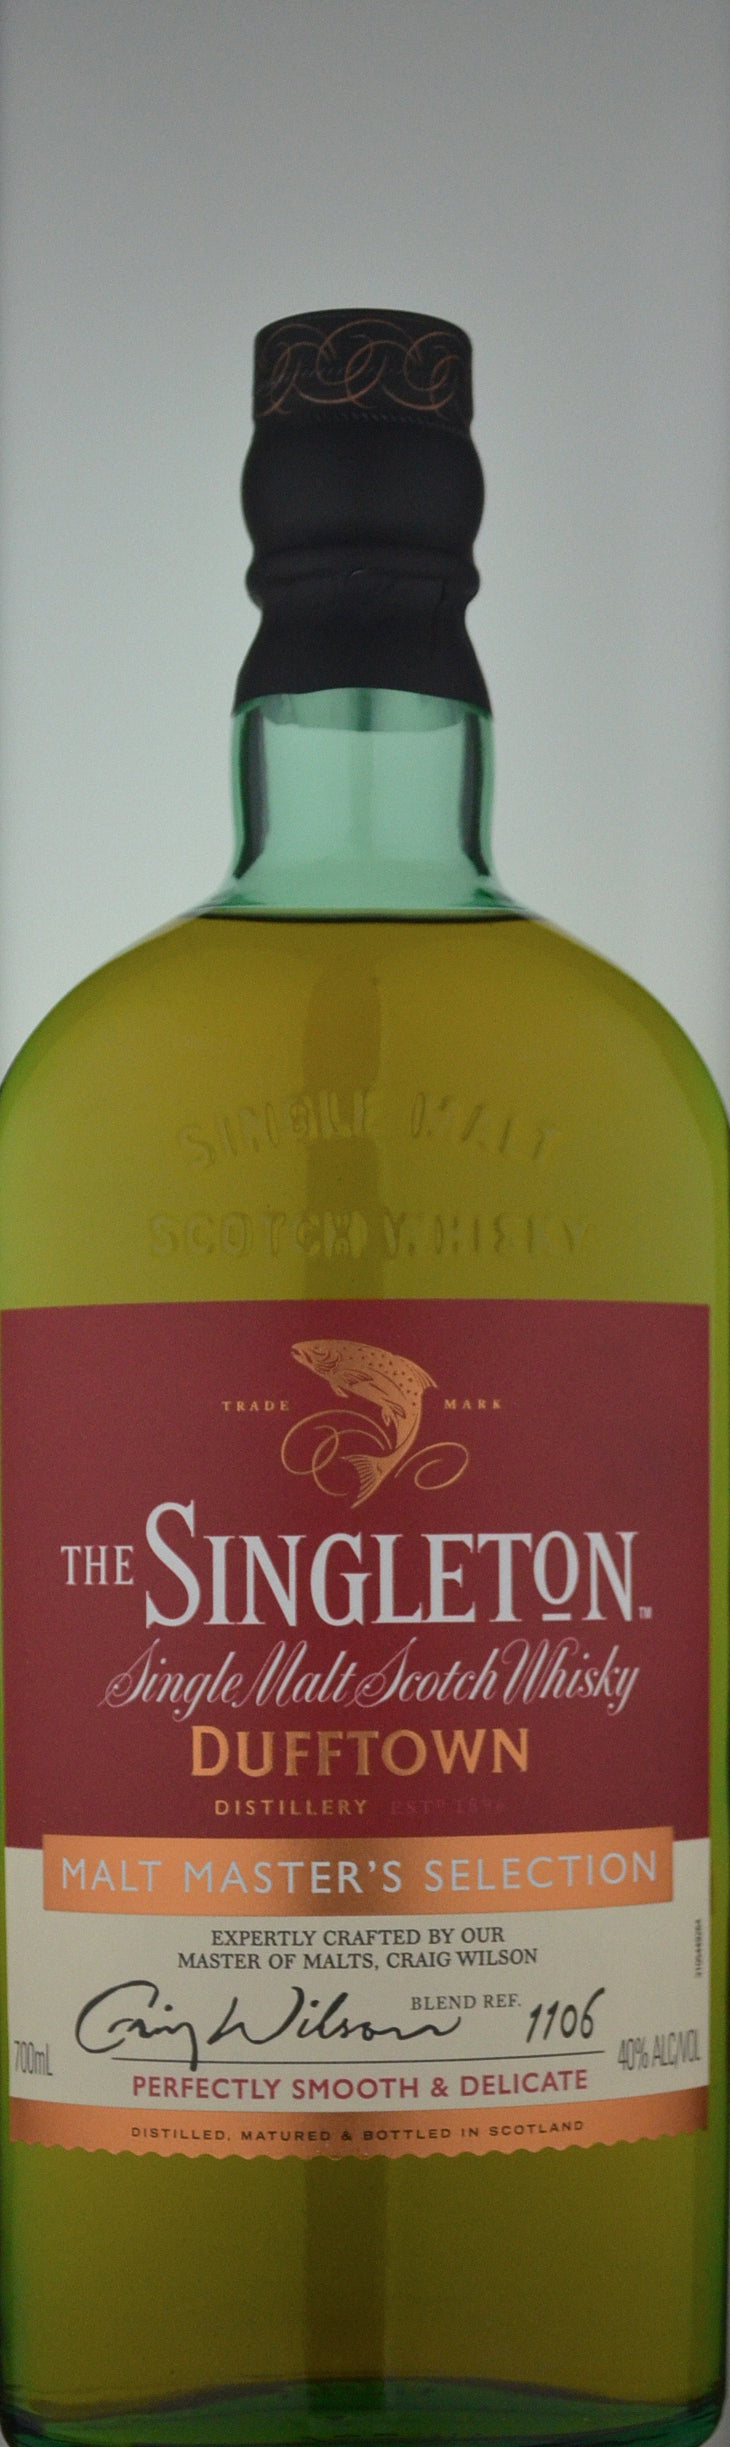 Dufftown Distillery The Singleton Malt Master's Selection Single Malt Scotch Whisky N/V